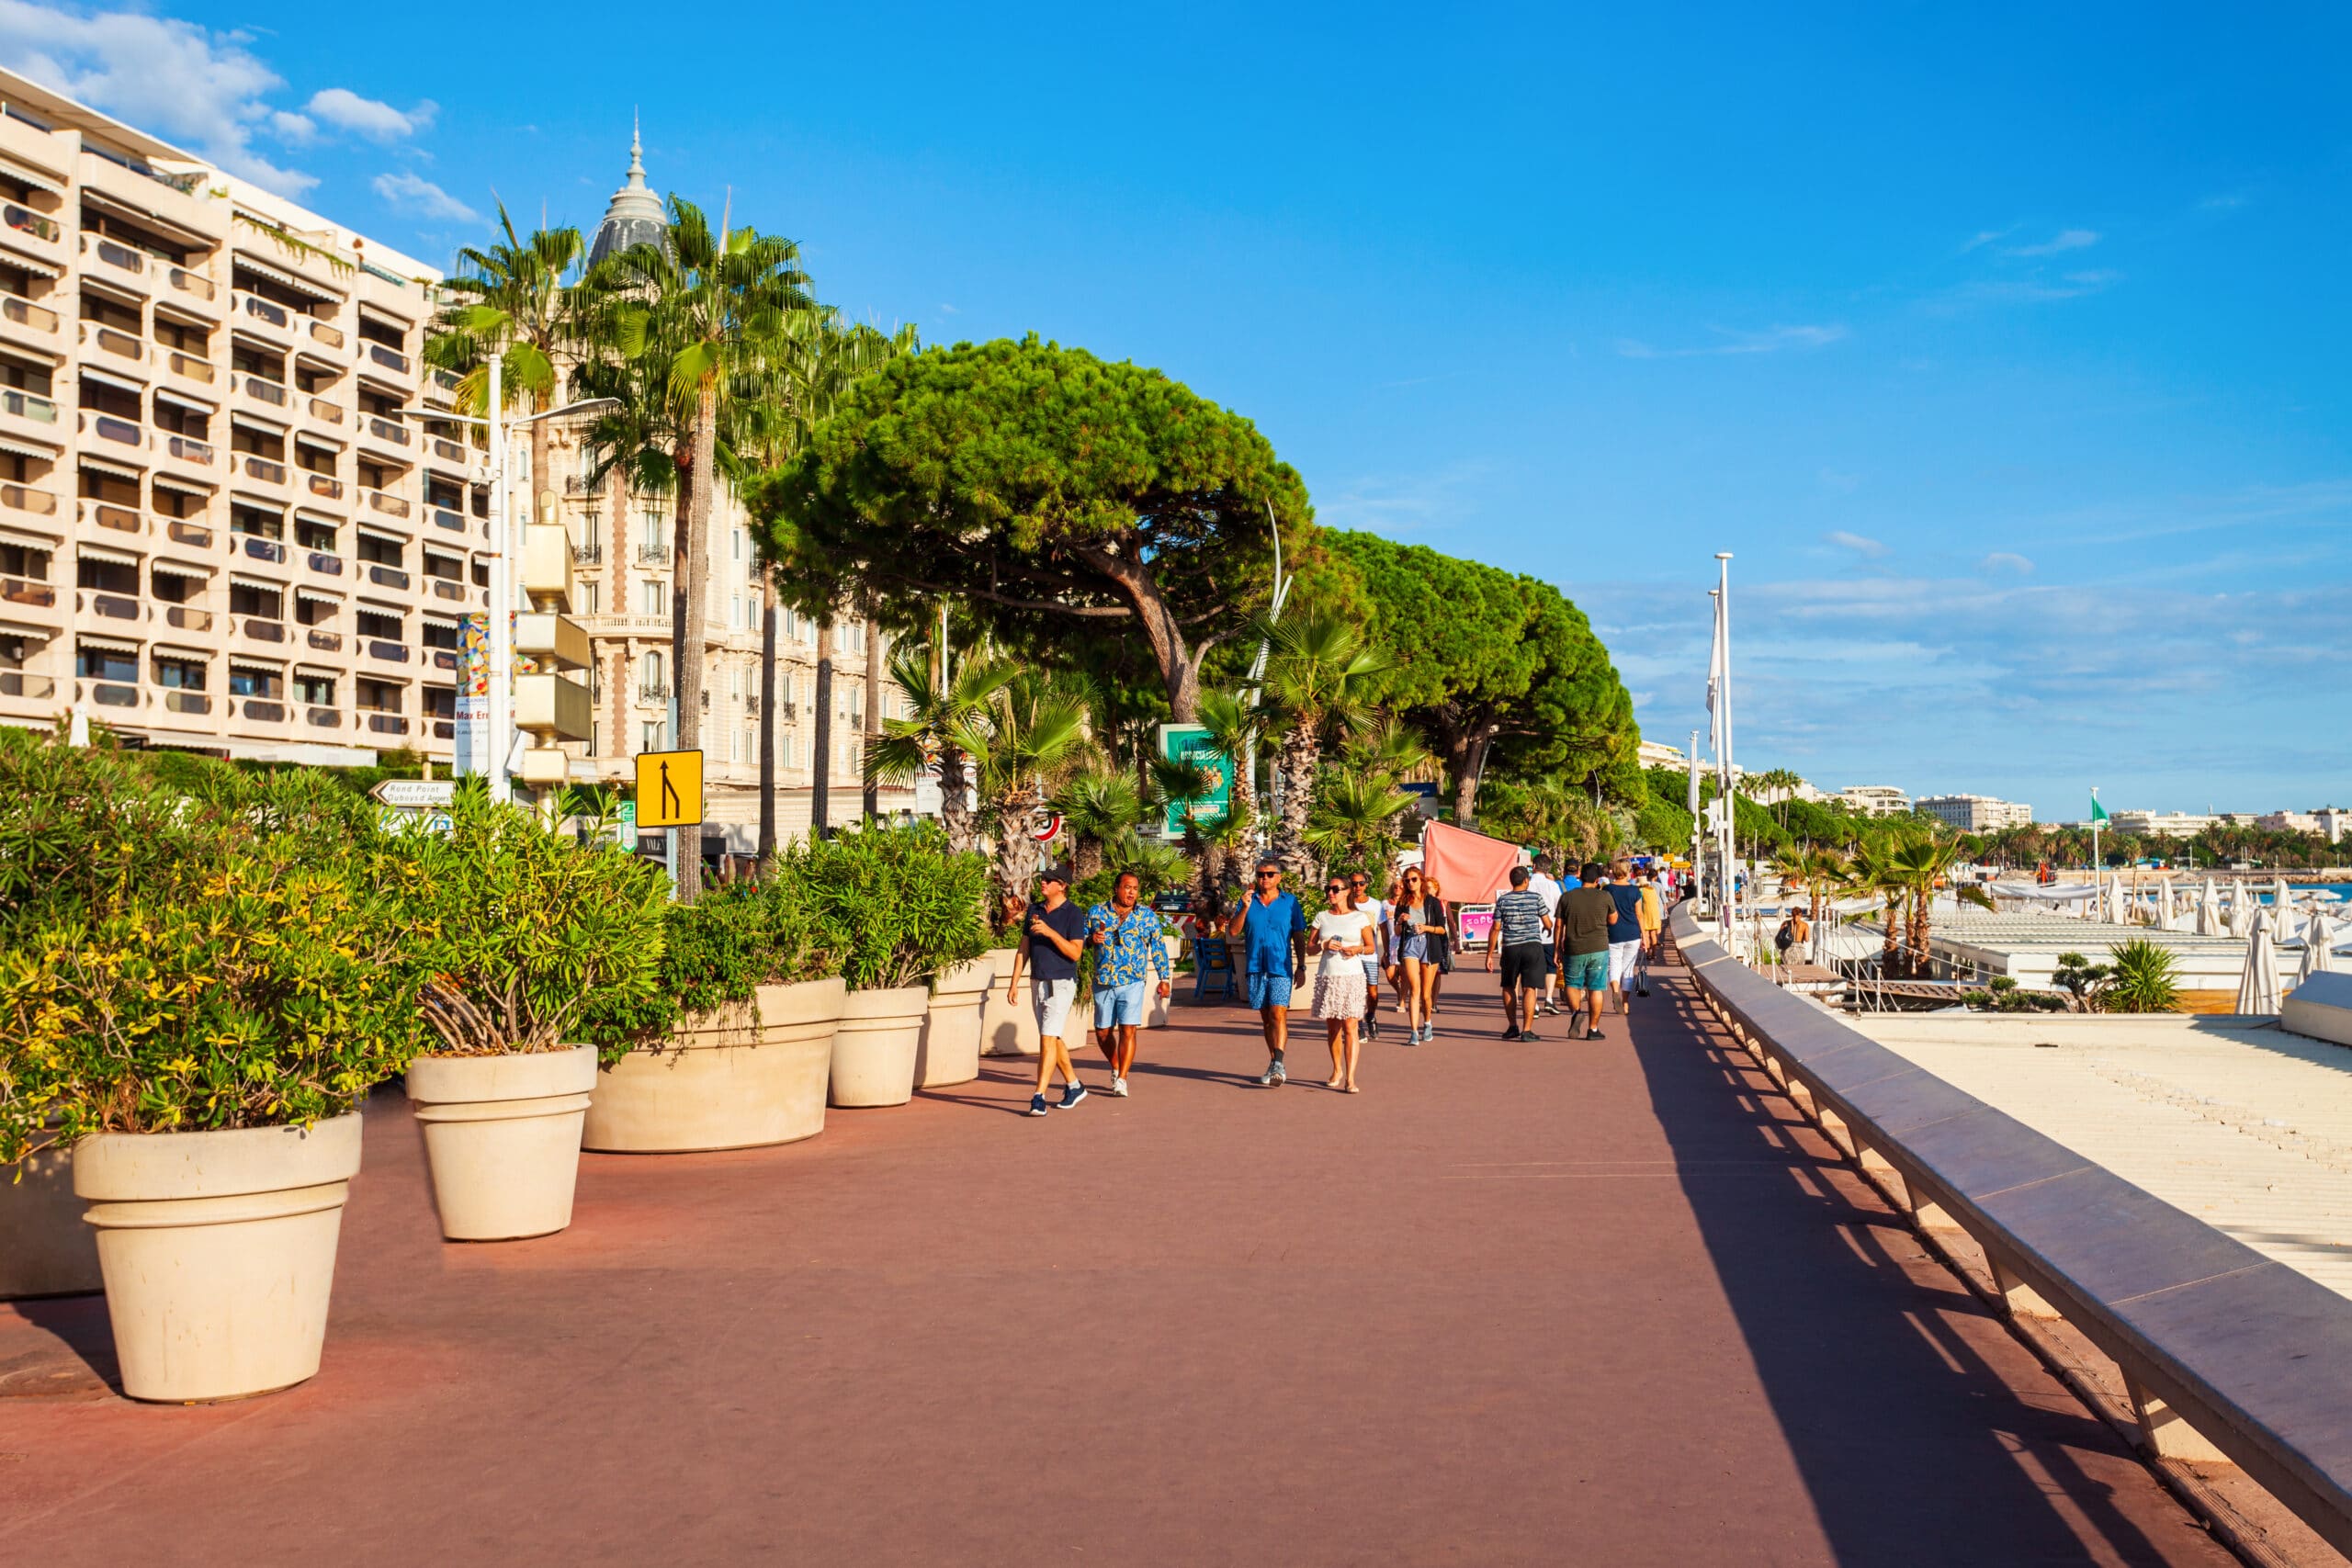 Promenade Croisette Boulevard in Cannes